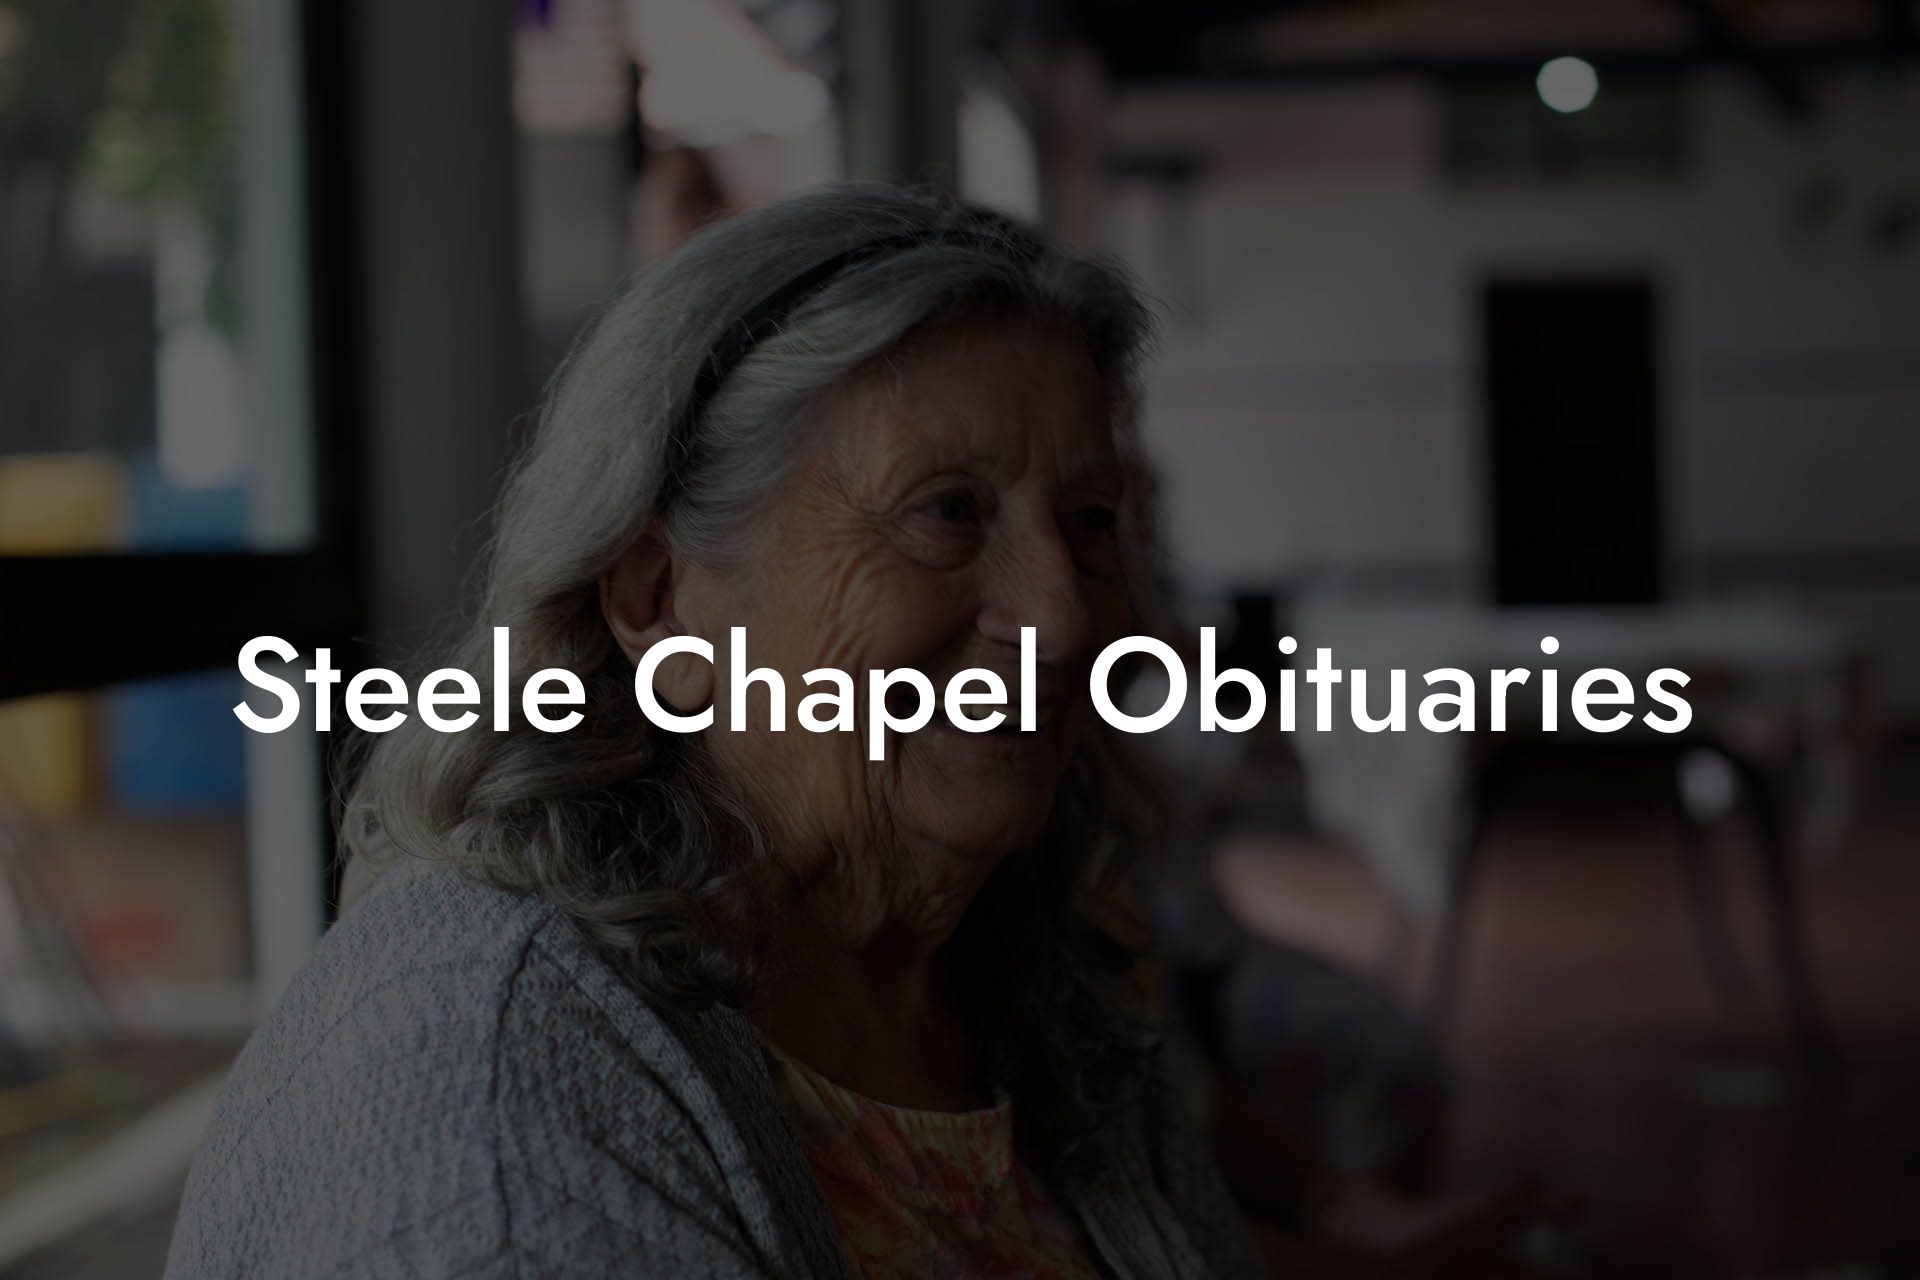 Steele Chapel Obituaries